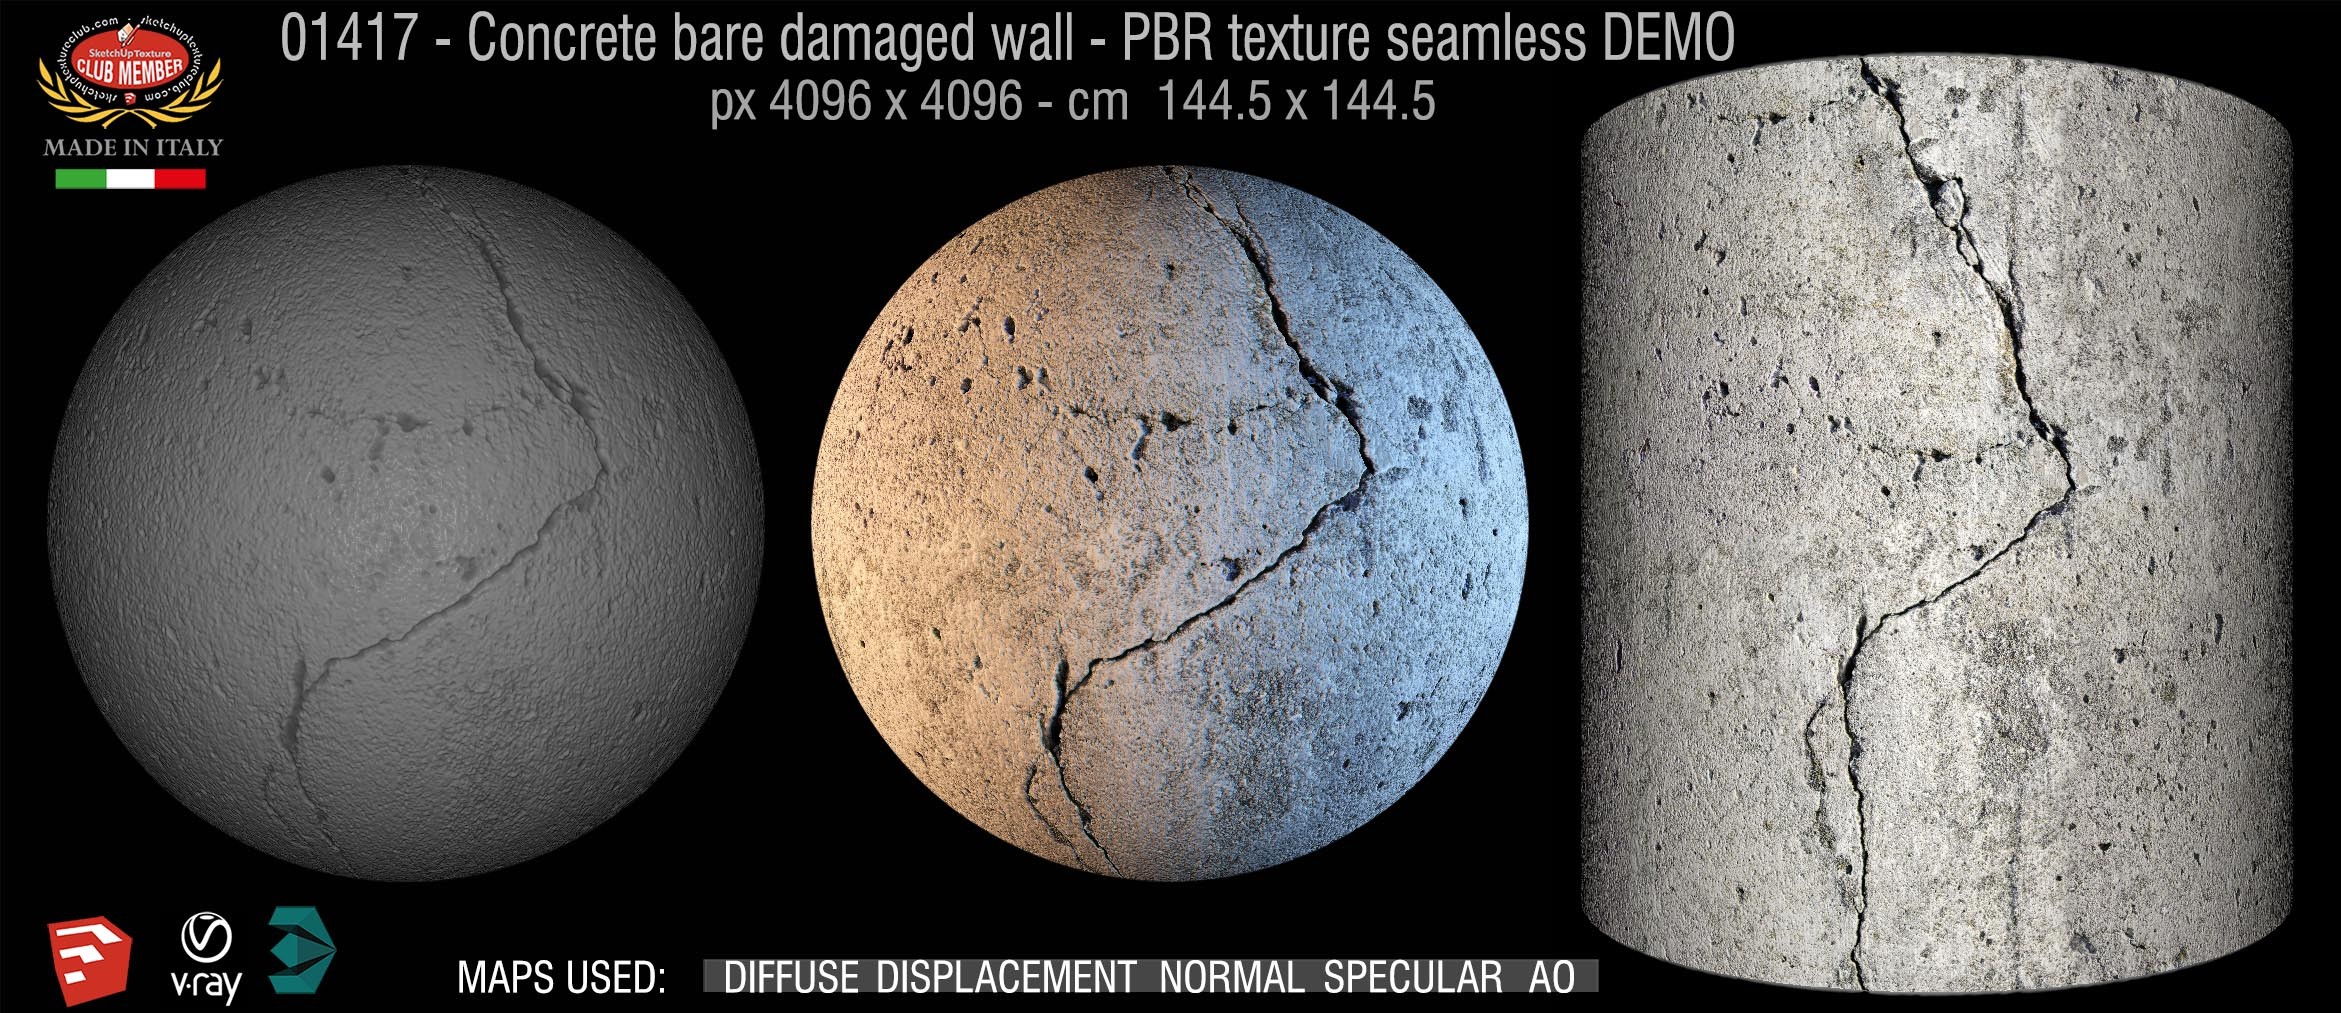 01417 Concrete bare damaged PBR texture seamless DEMO